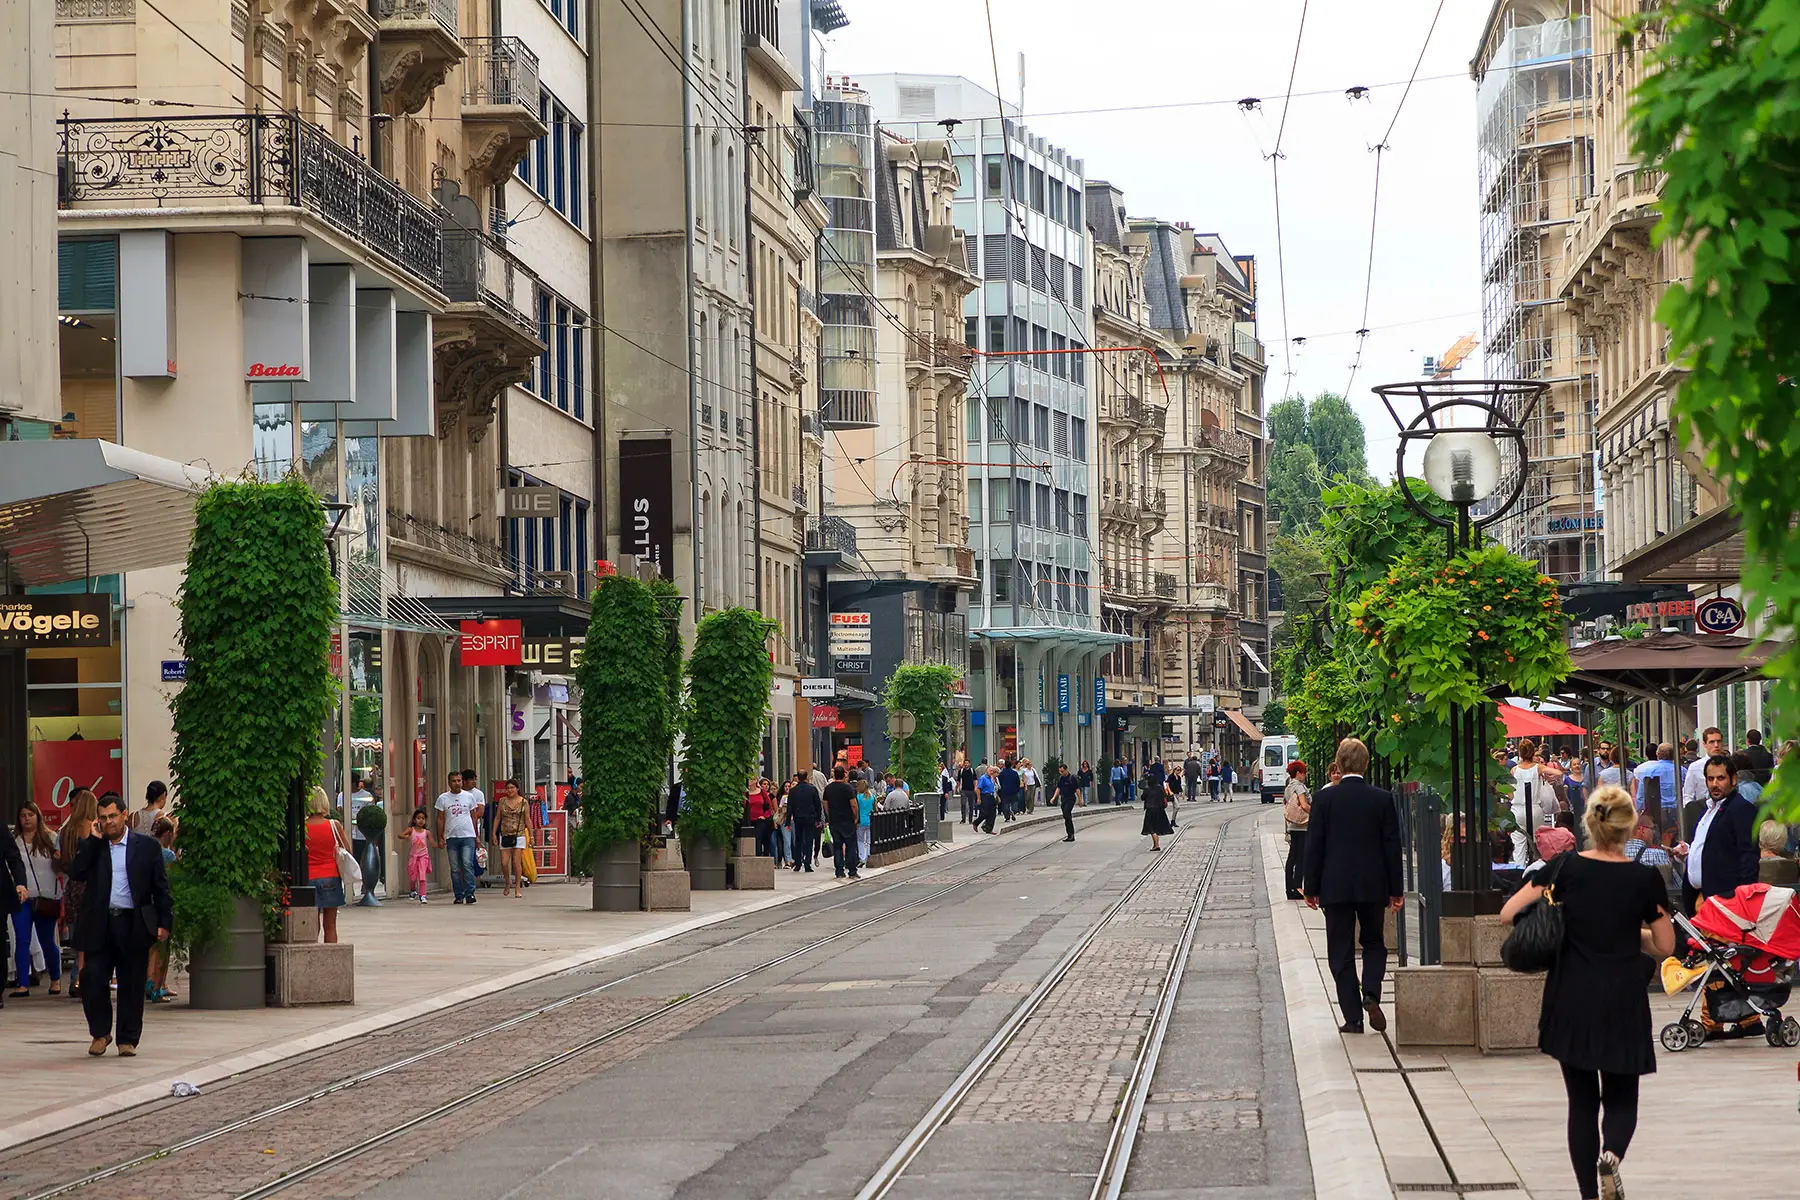 A shopping street in Geneva